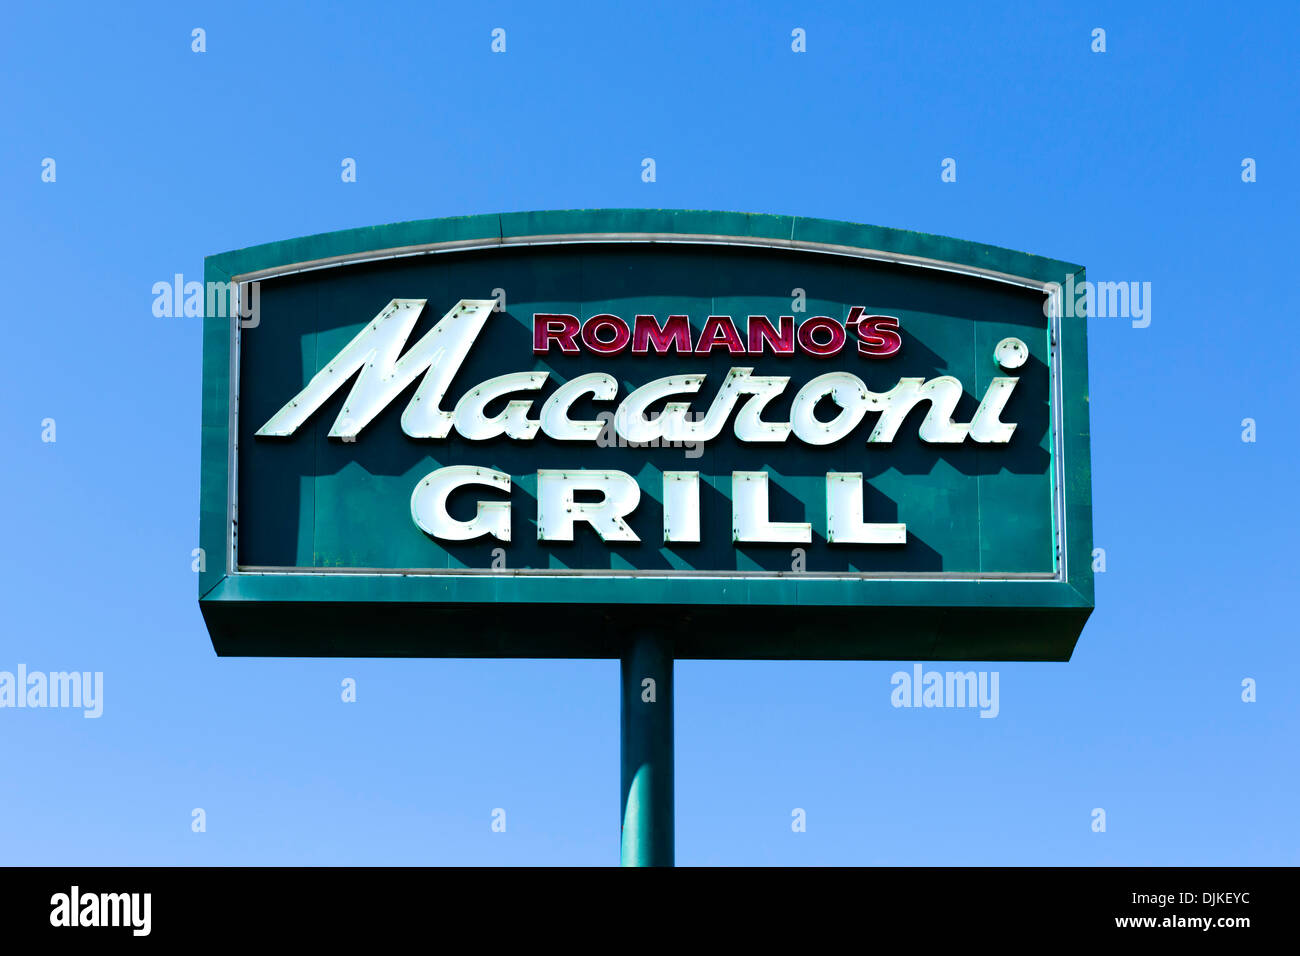 Romano's Macaroni Grill restaurant sign, Central Florida, USA Stock Photo